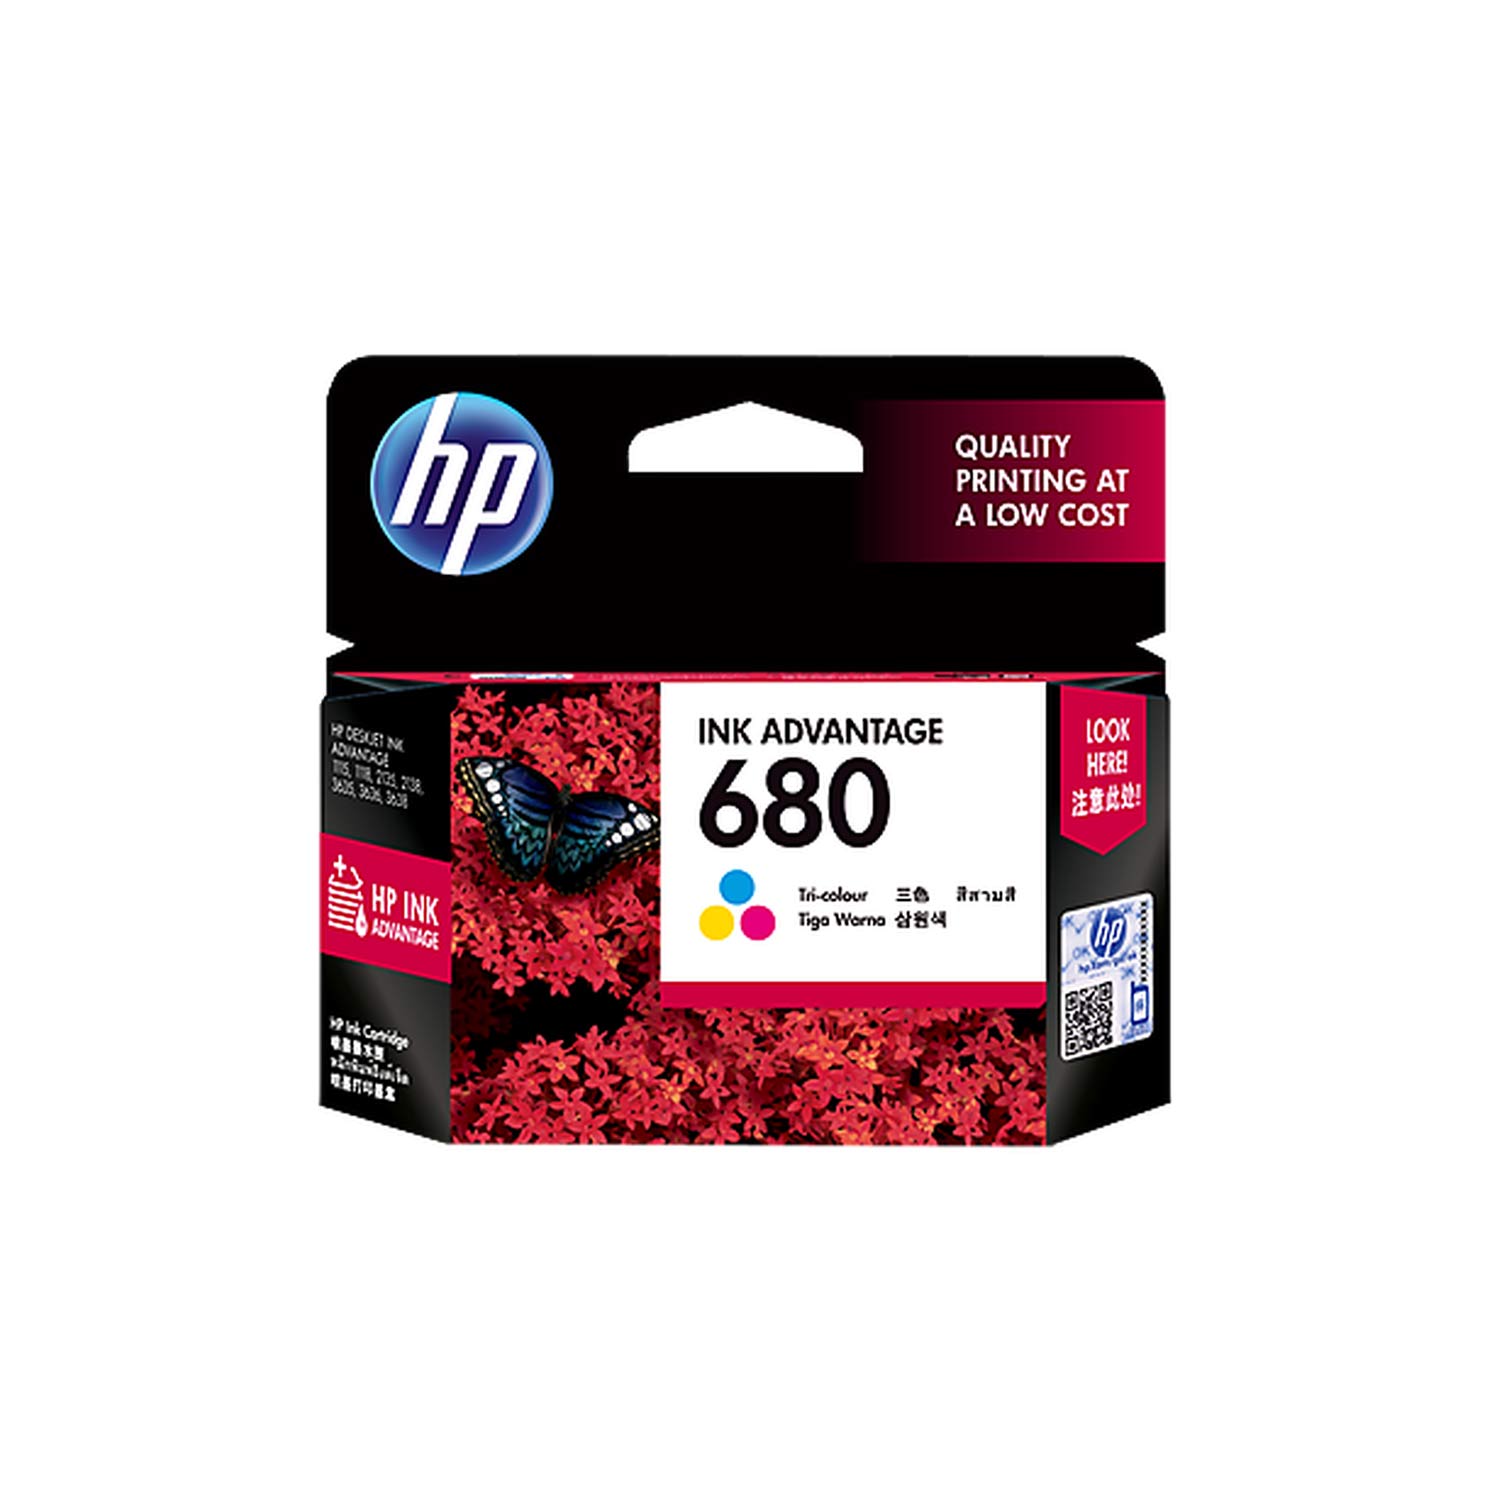 HP 680 TriColor Ink Cartridge | OfficeWorks 